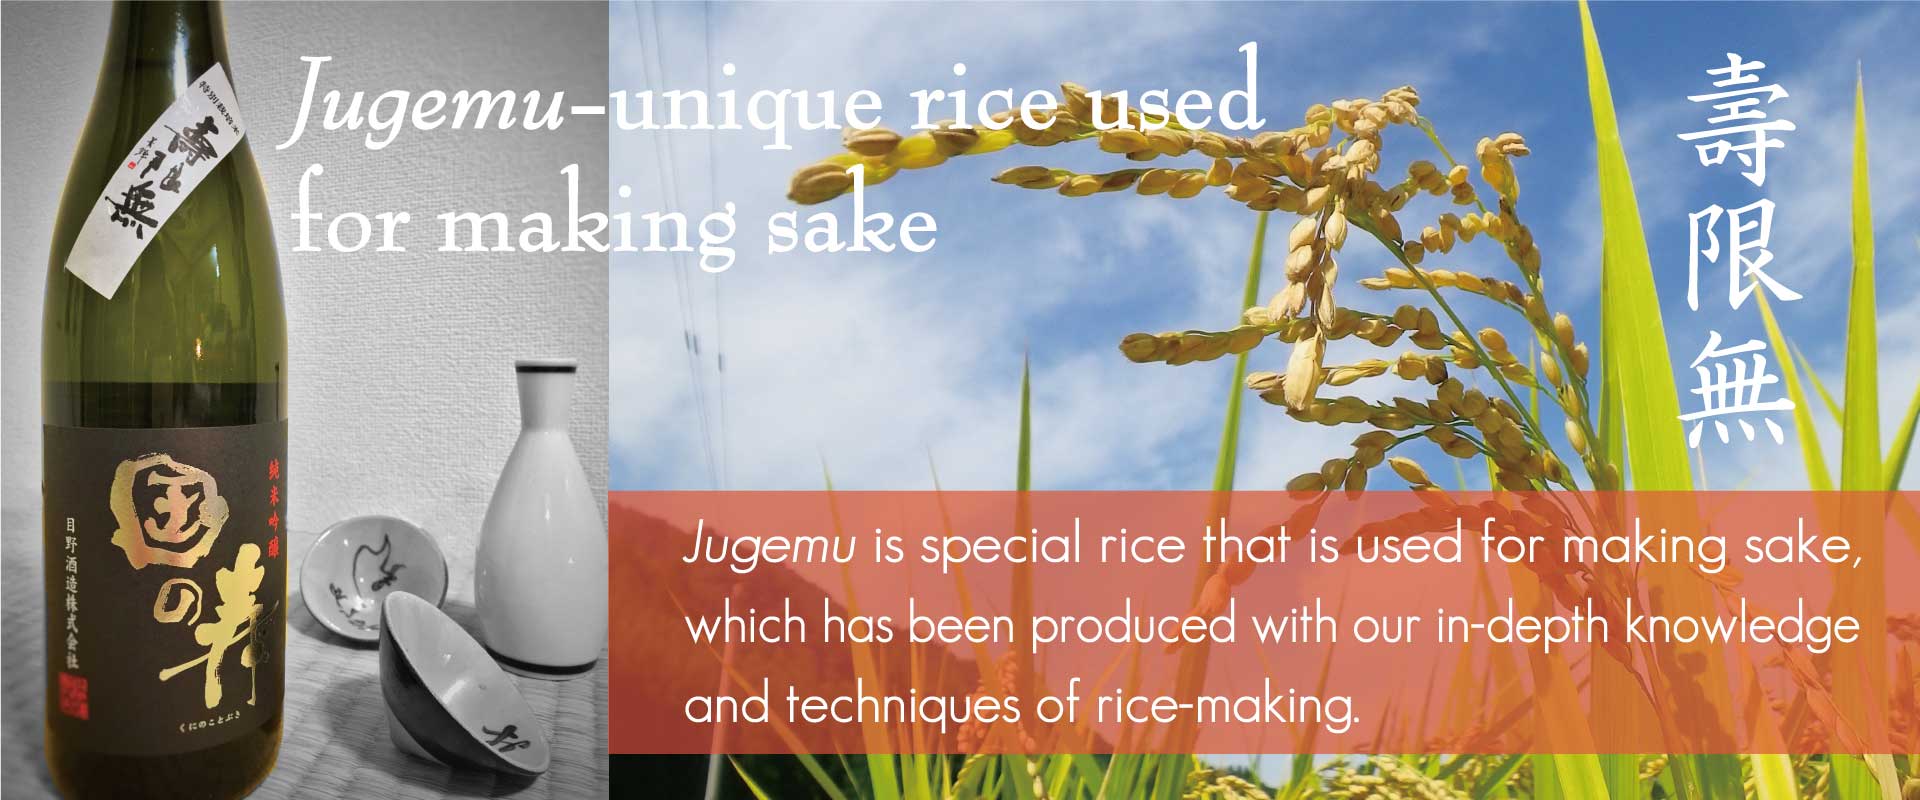 Jugemu -unique rice used for making sake 